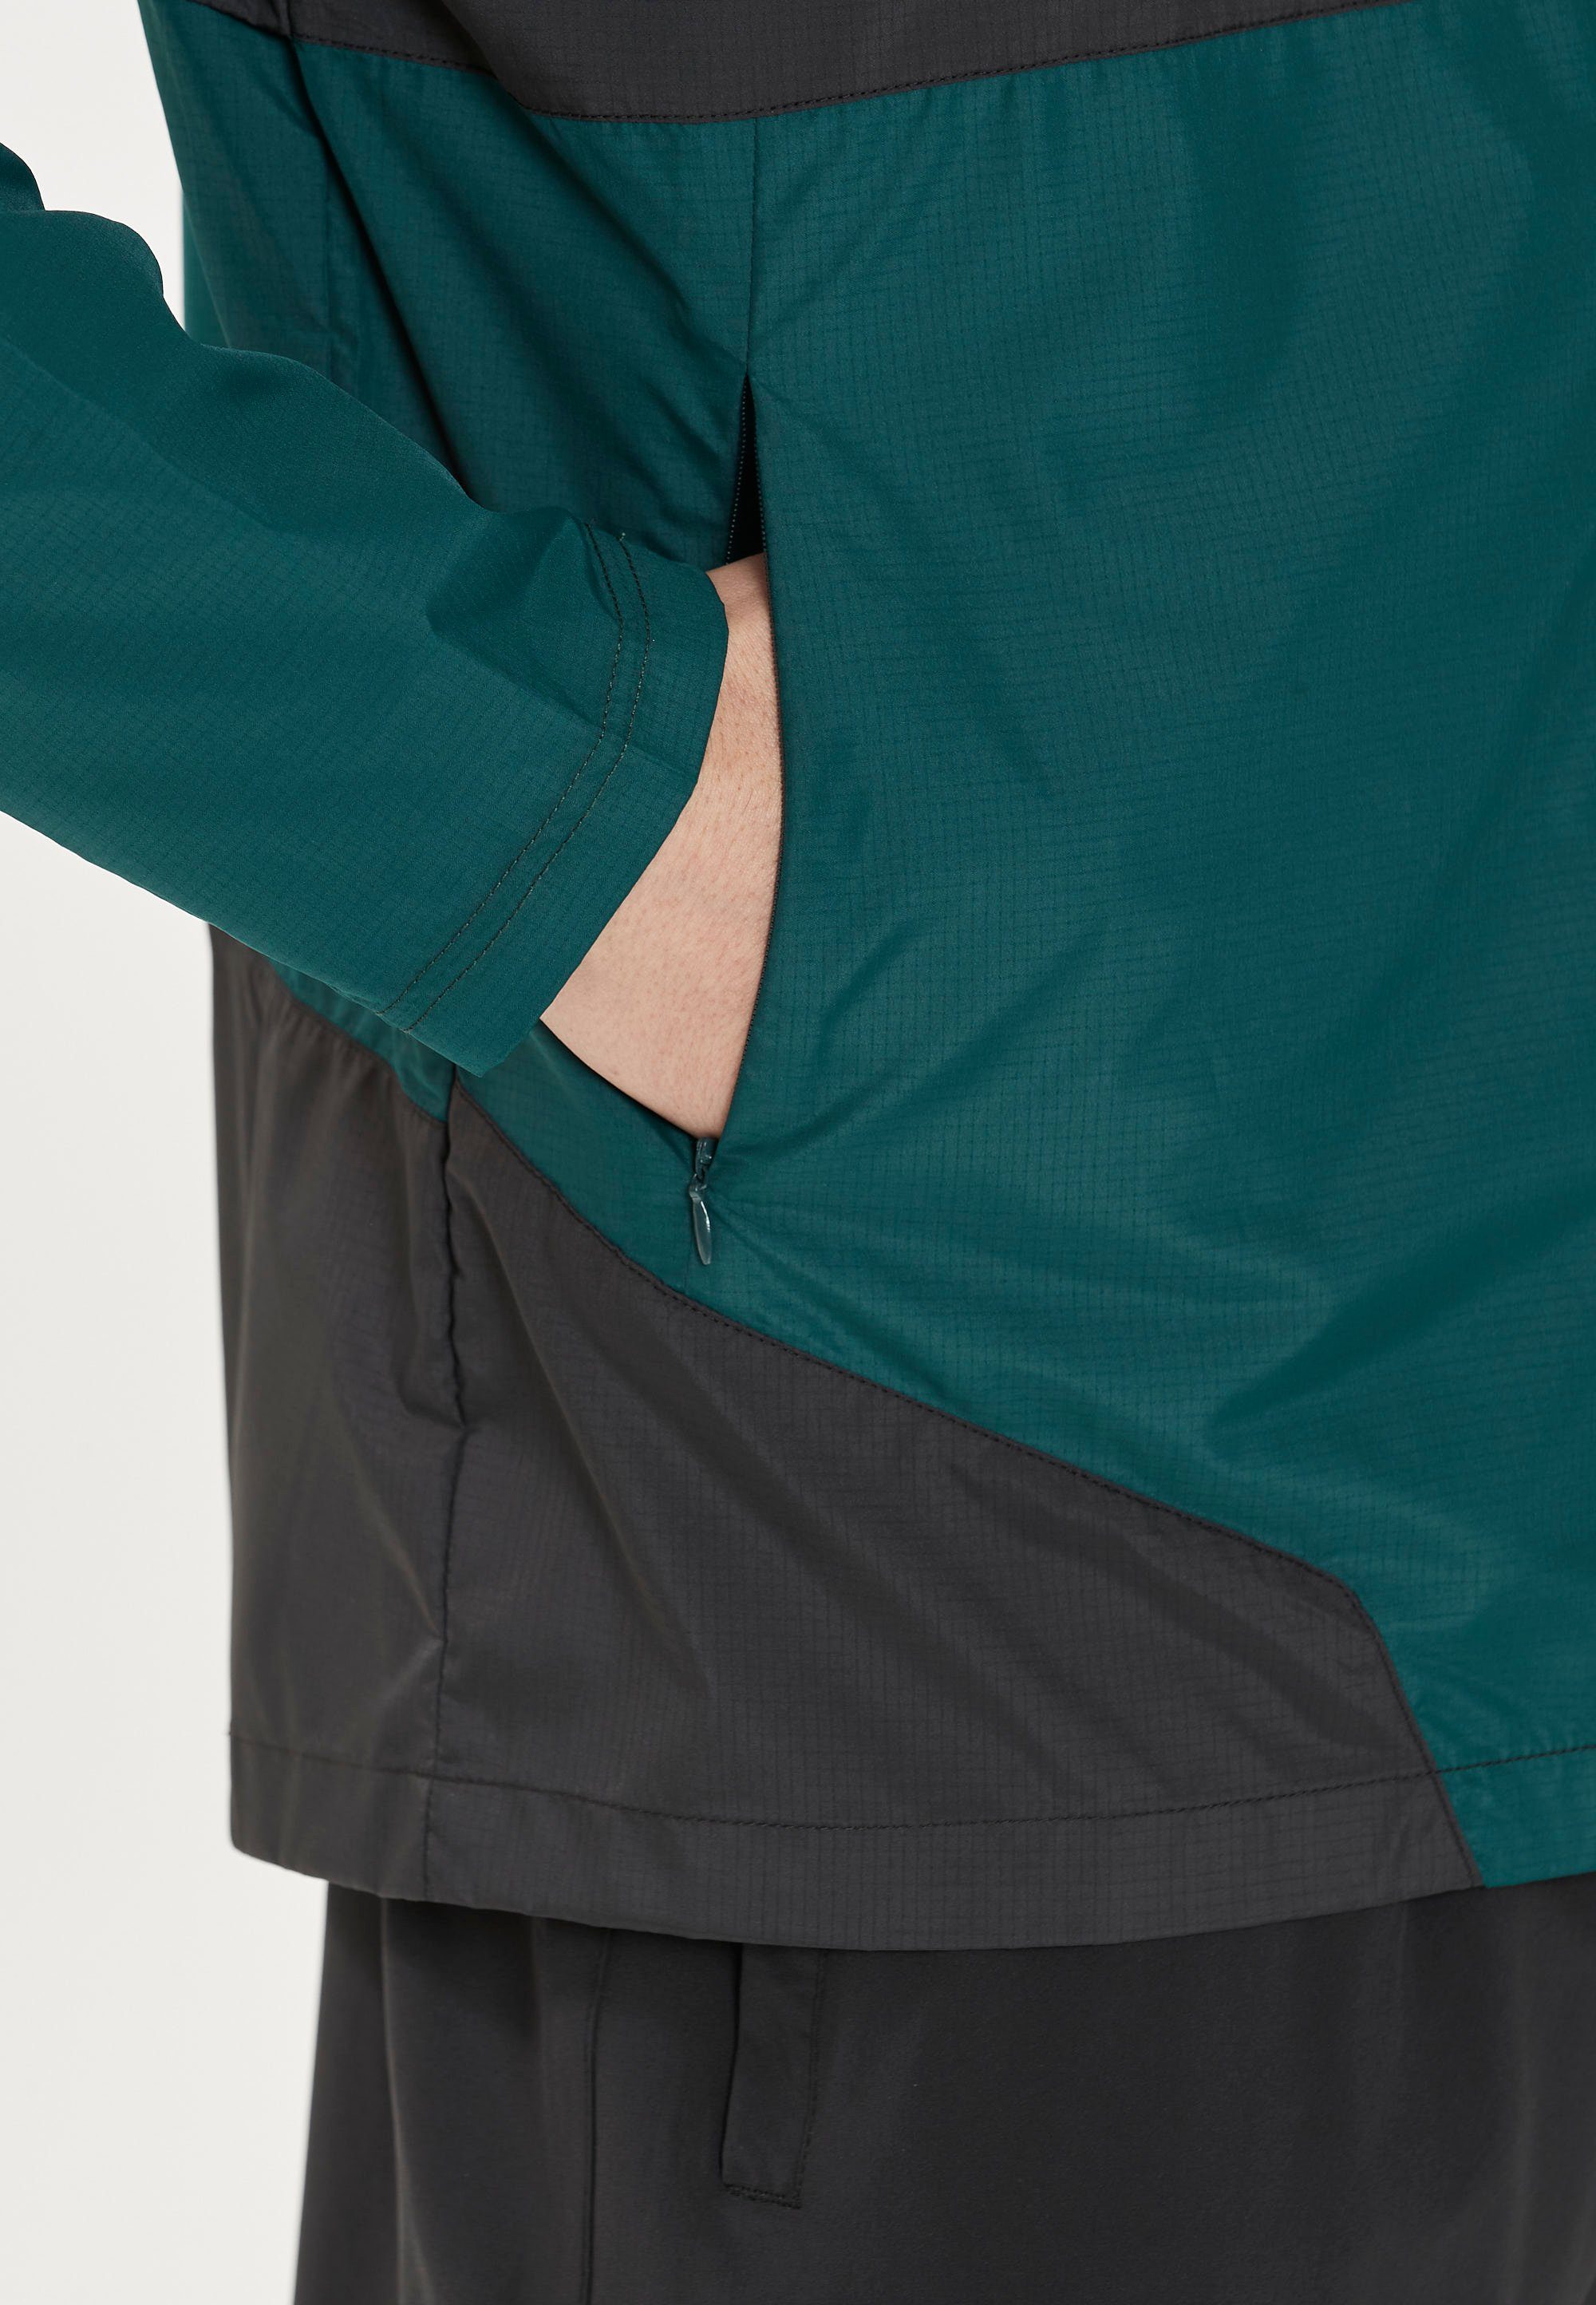 Laufjacke NOVANT Functional Details M mit reflektierenden Jacket dunkelgrün ENDURANCE